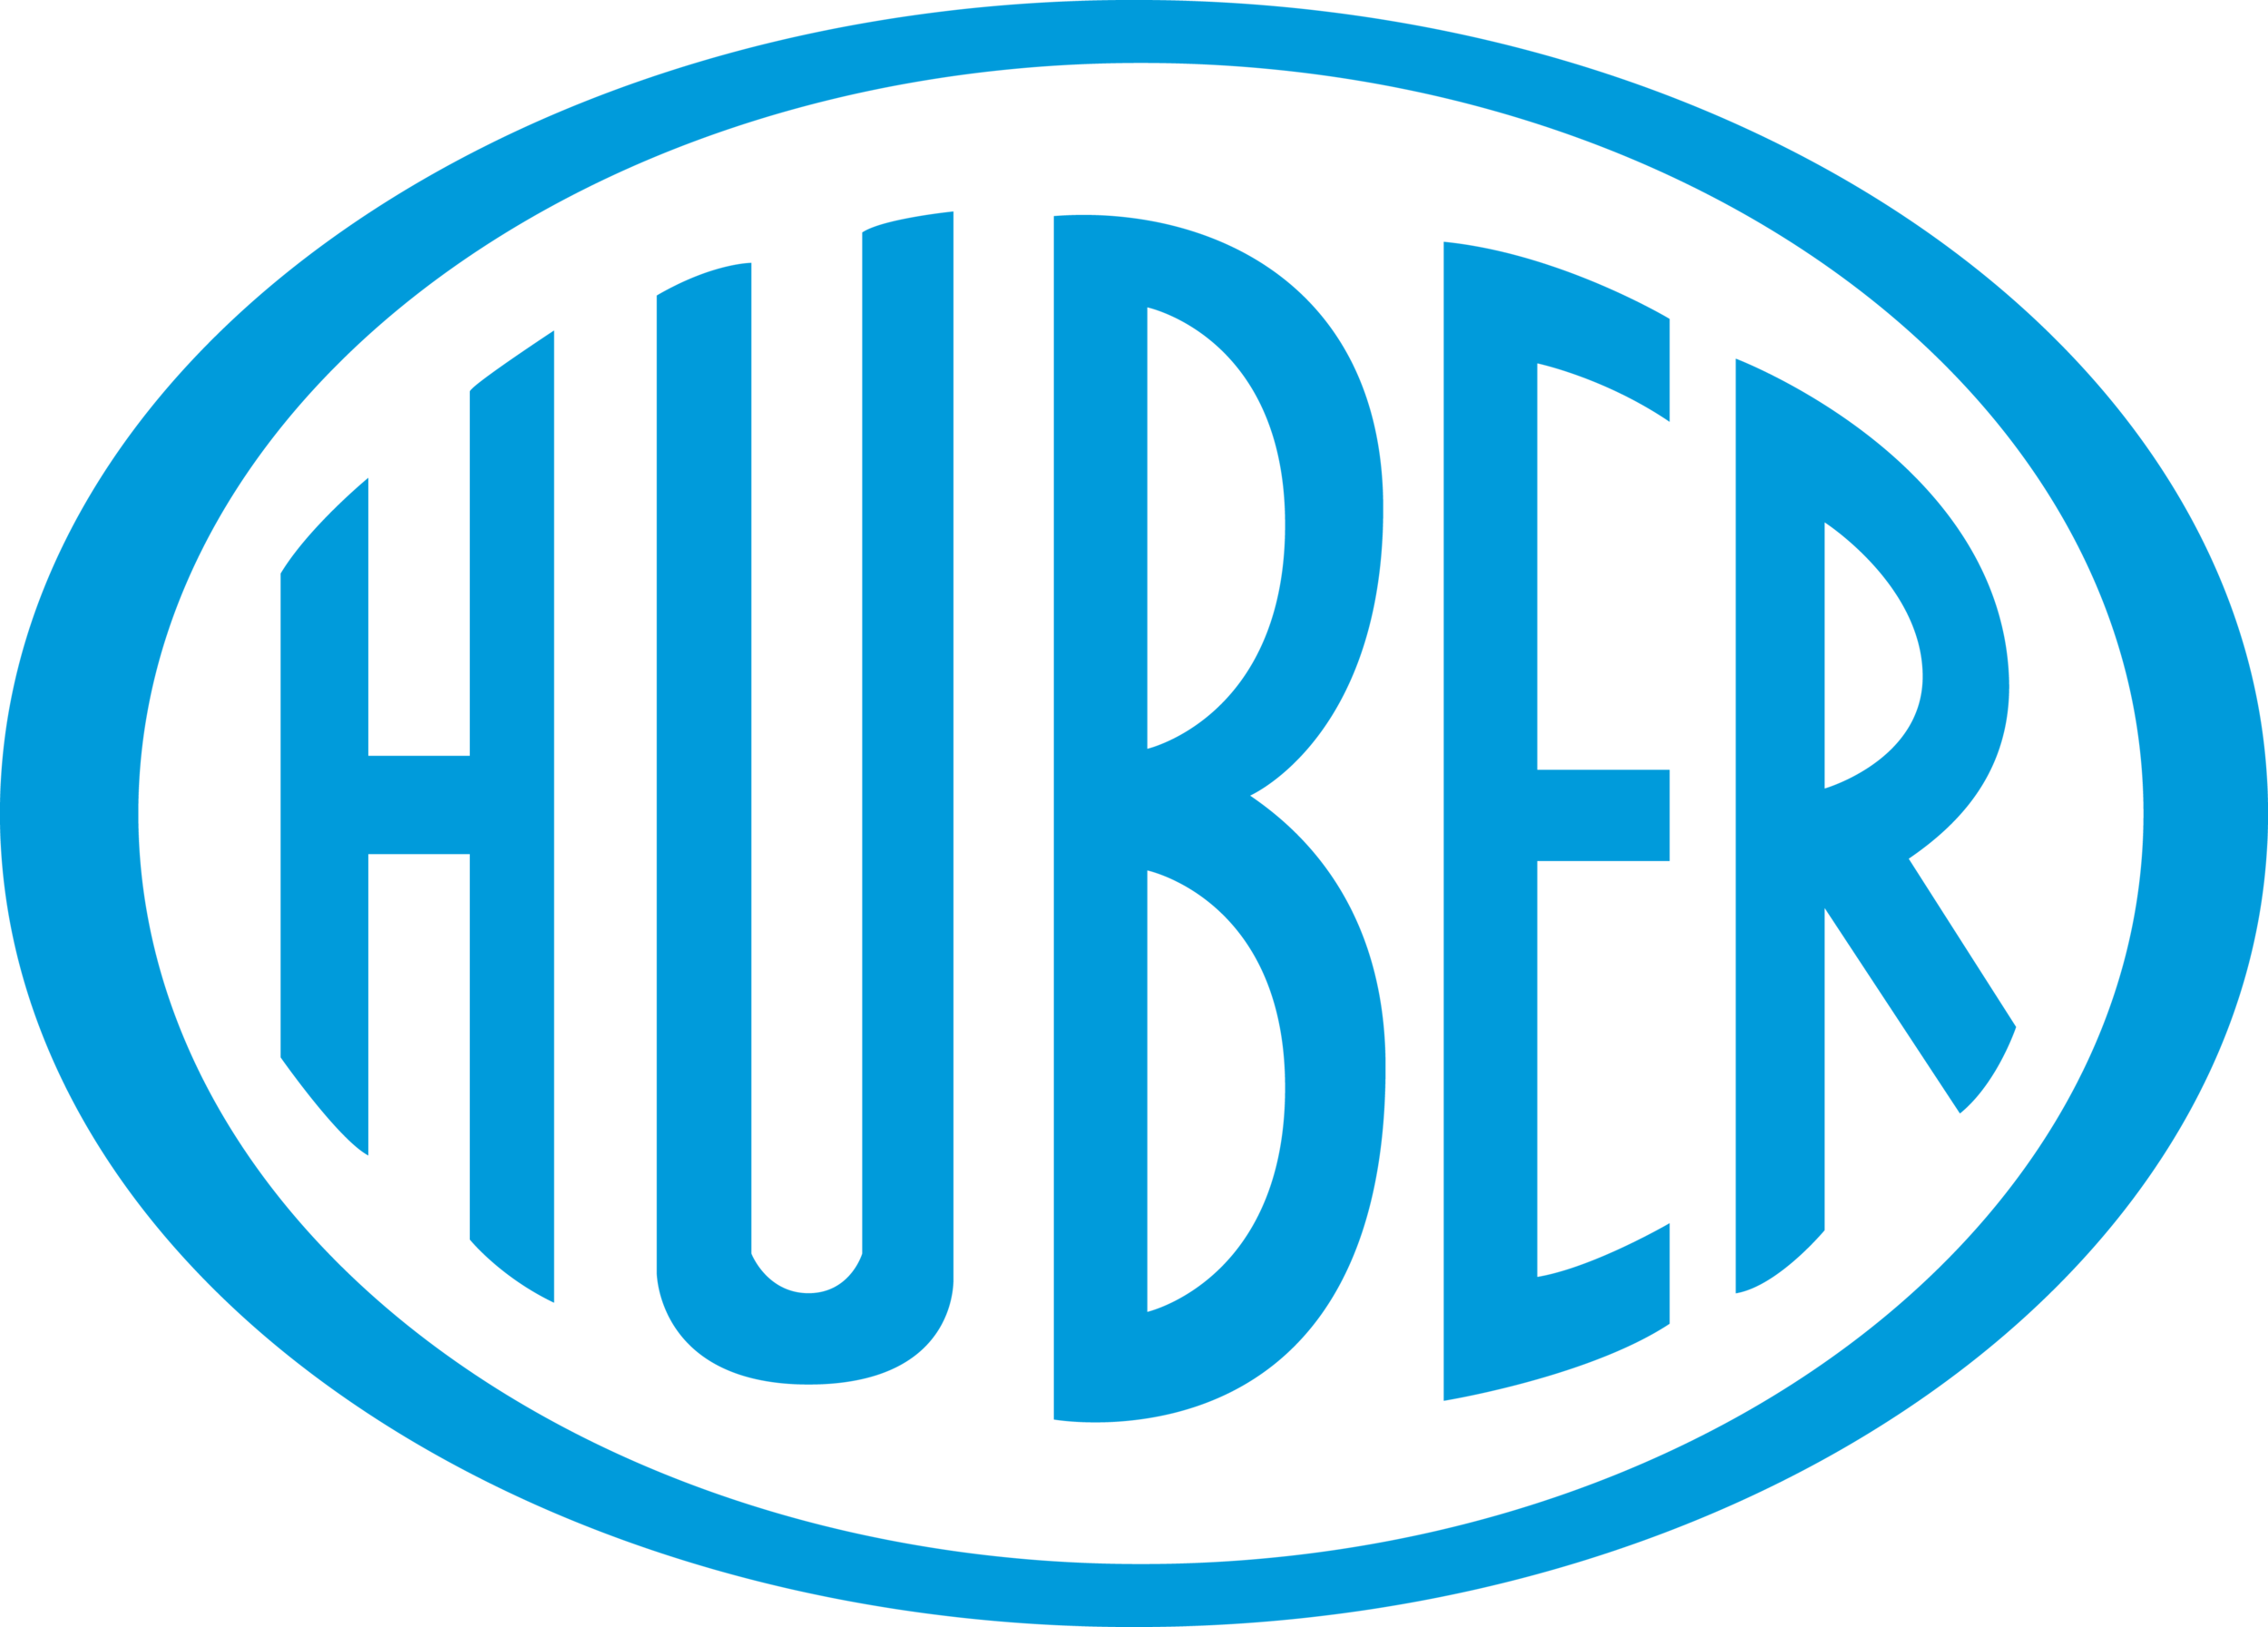 Huber logo - Pantone Process Blue copy.png